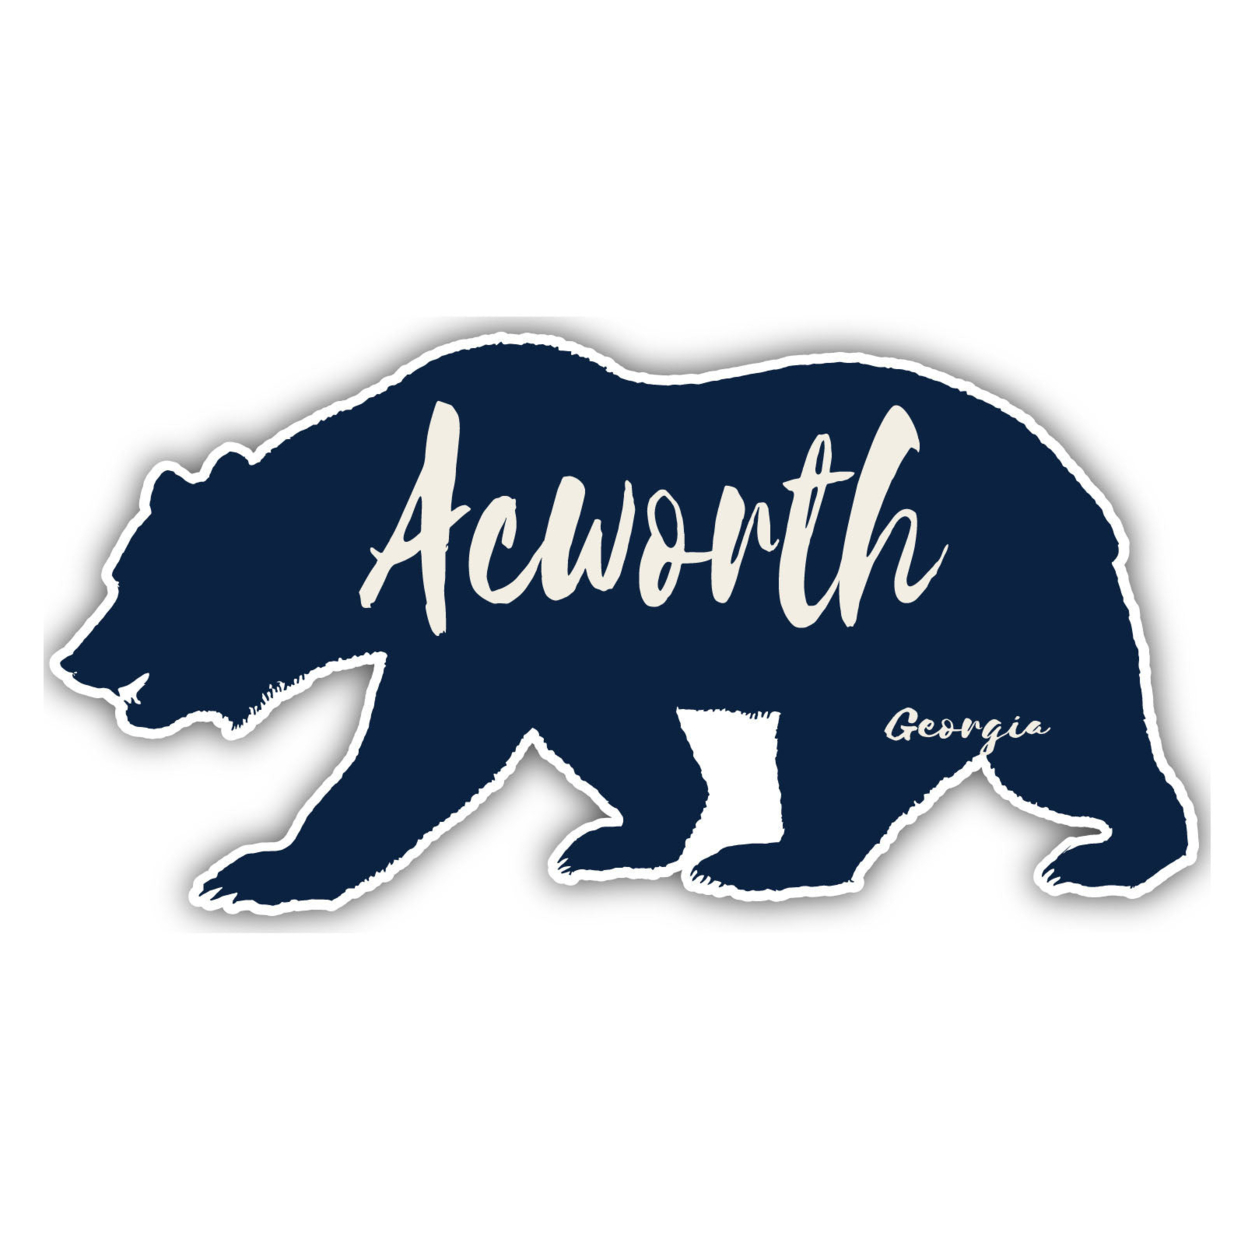 Acworth Georgia Souvenir Decorative Stickers (Choose Theme And Size) - Single Unit, 6-Inch, Great Outdoors